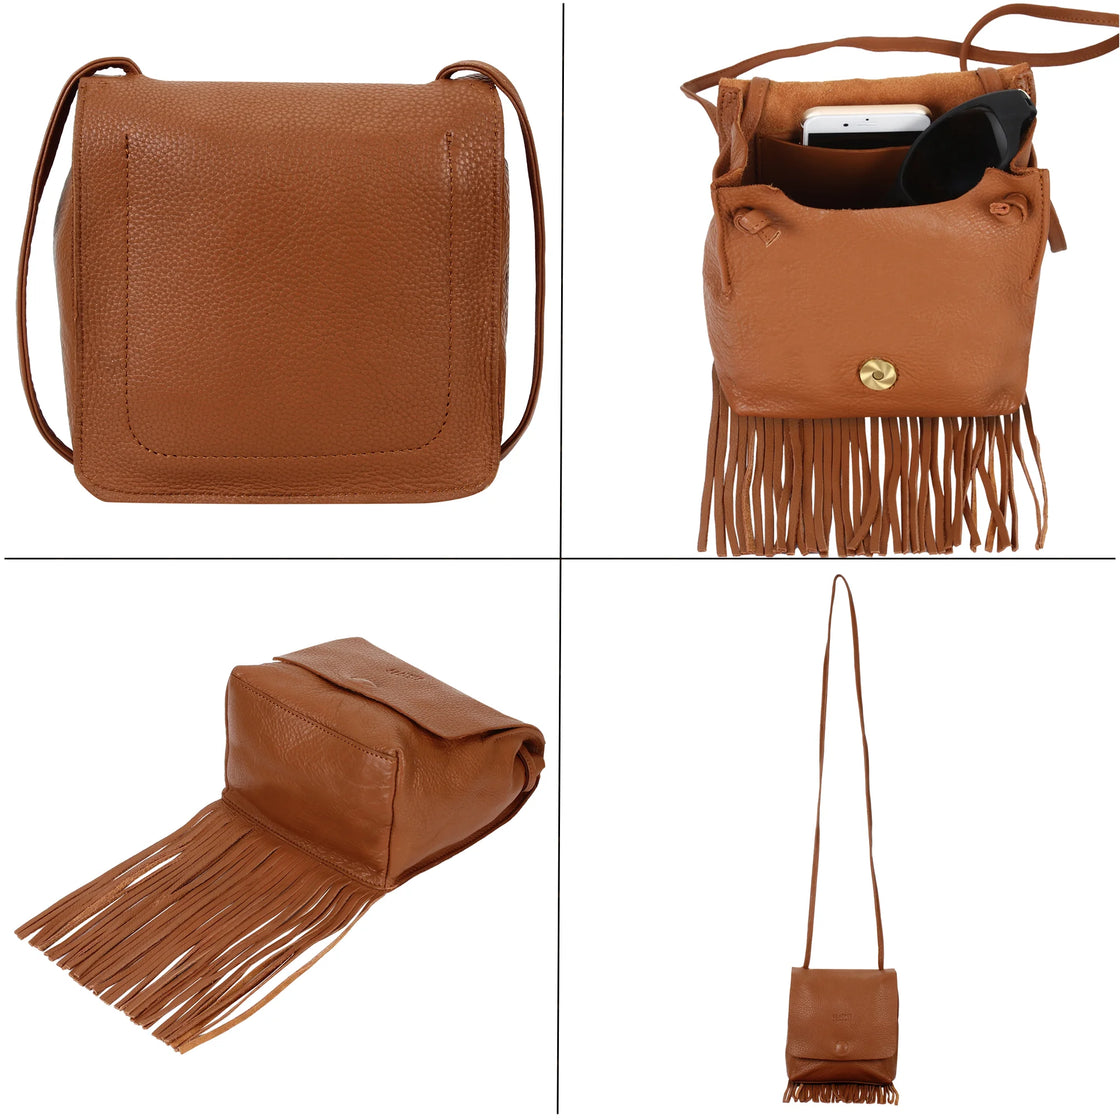 Leather Fringe Boho Crossbody Bag with Tassel for Women (Small, Brown)